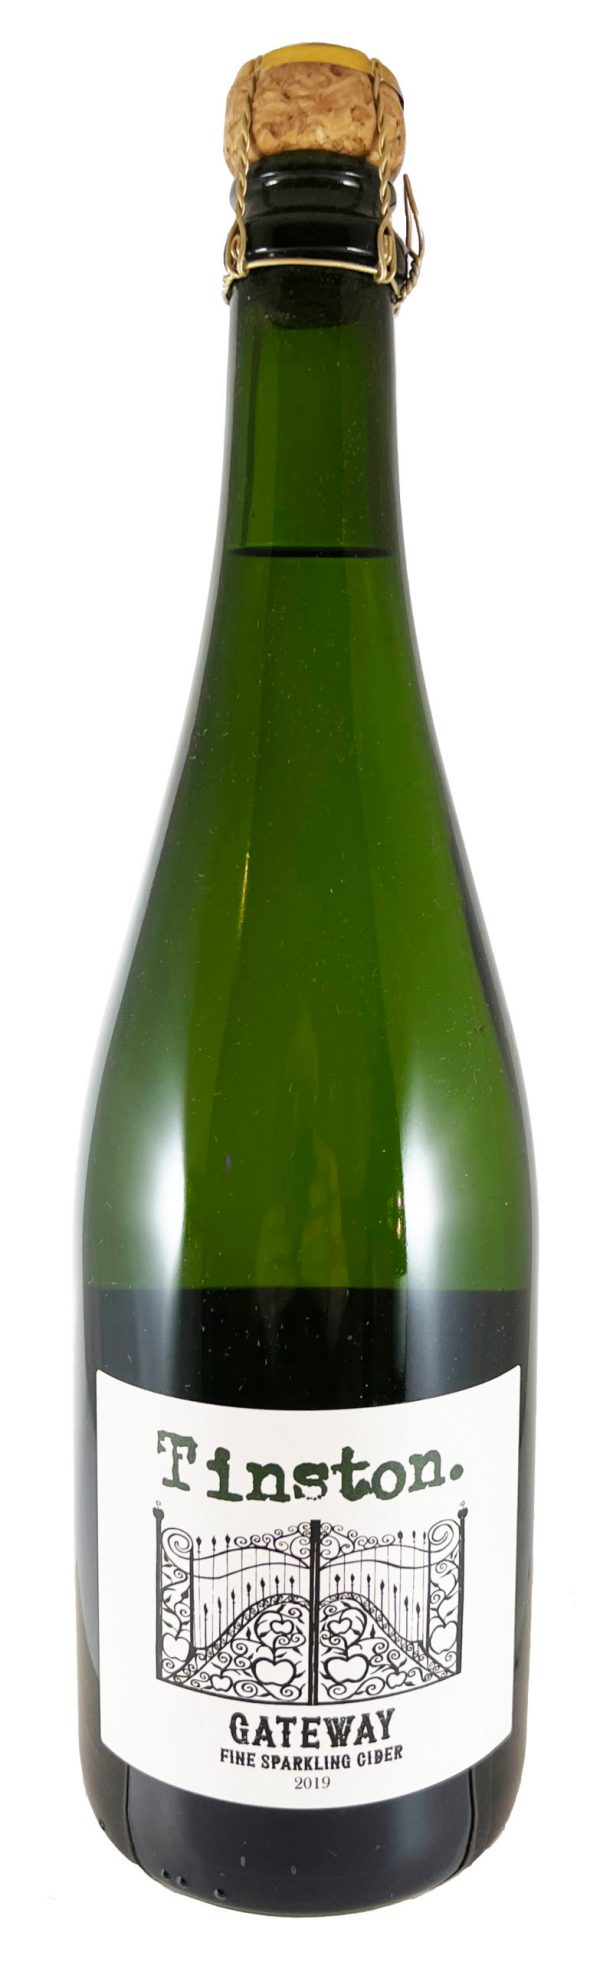 ALL THINGS DRINKS - Tinston Gateway English Sparkling Cider